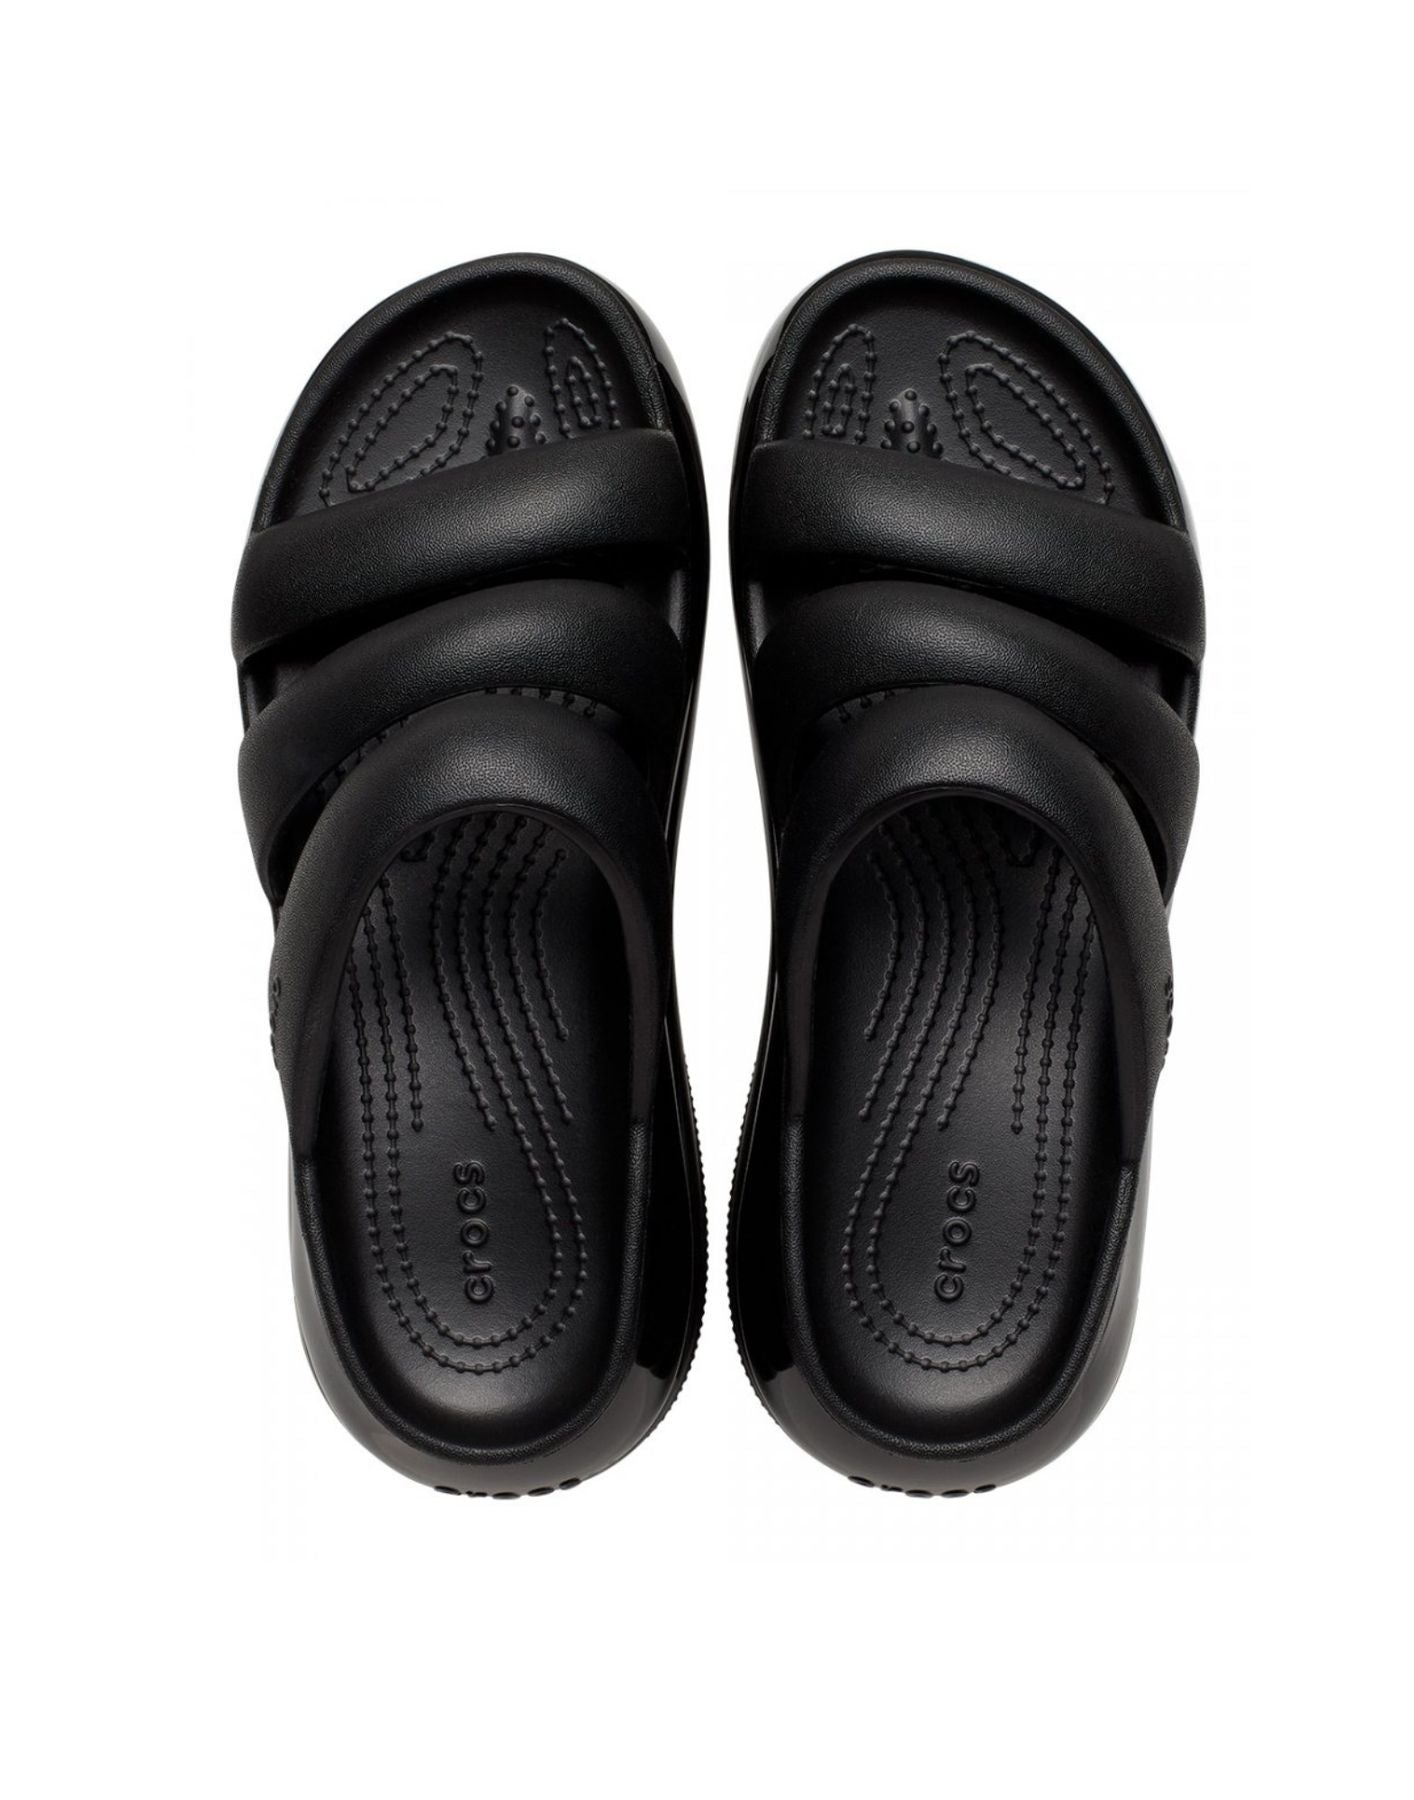 Schuhe Frau Mega Crush Triple Gurt Black Crocs